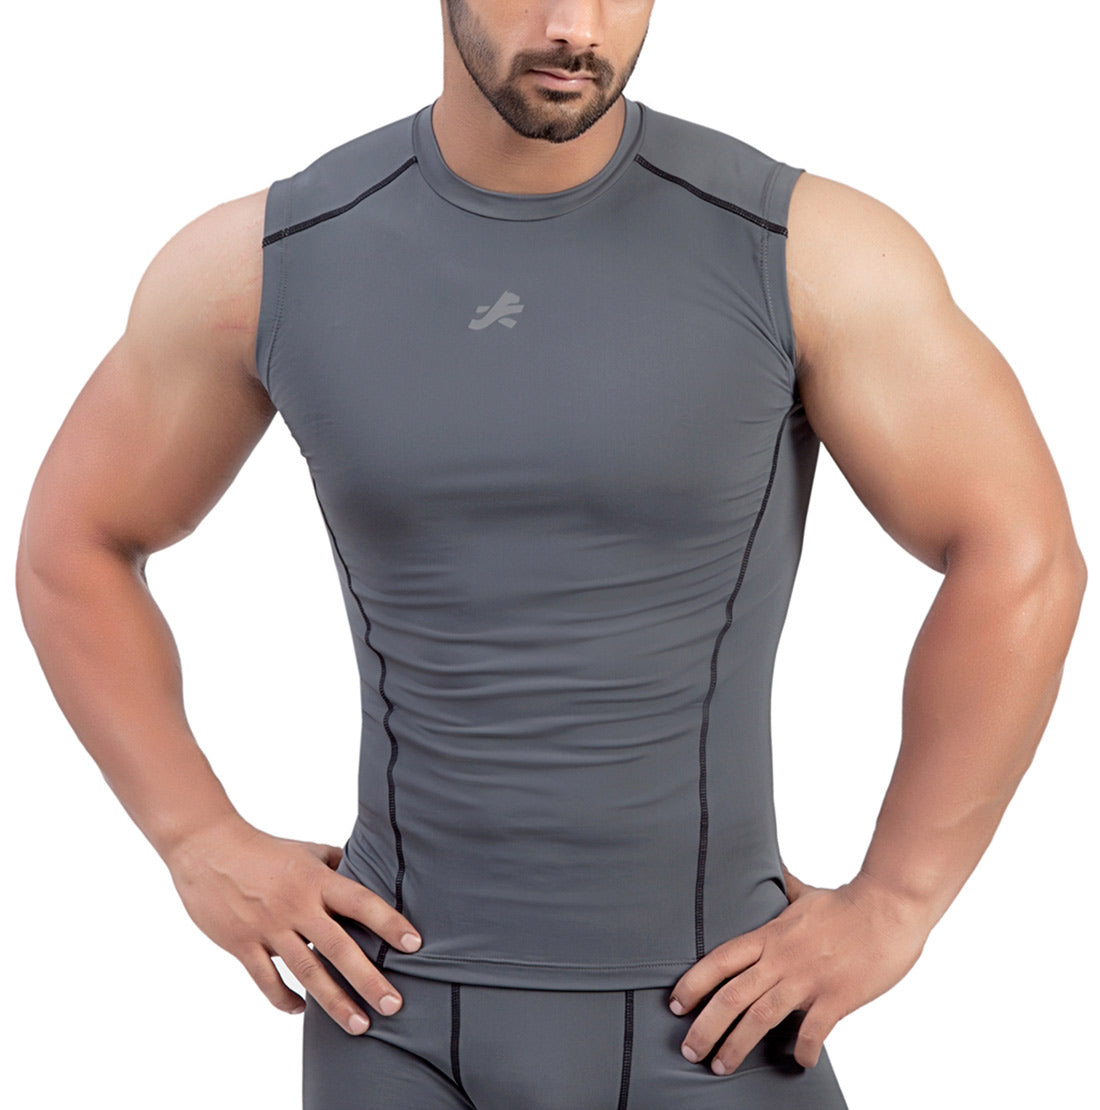 Nylon Compression Tshirt Cutsleeves Tights For Men (Dark Grey)